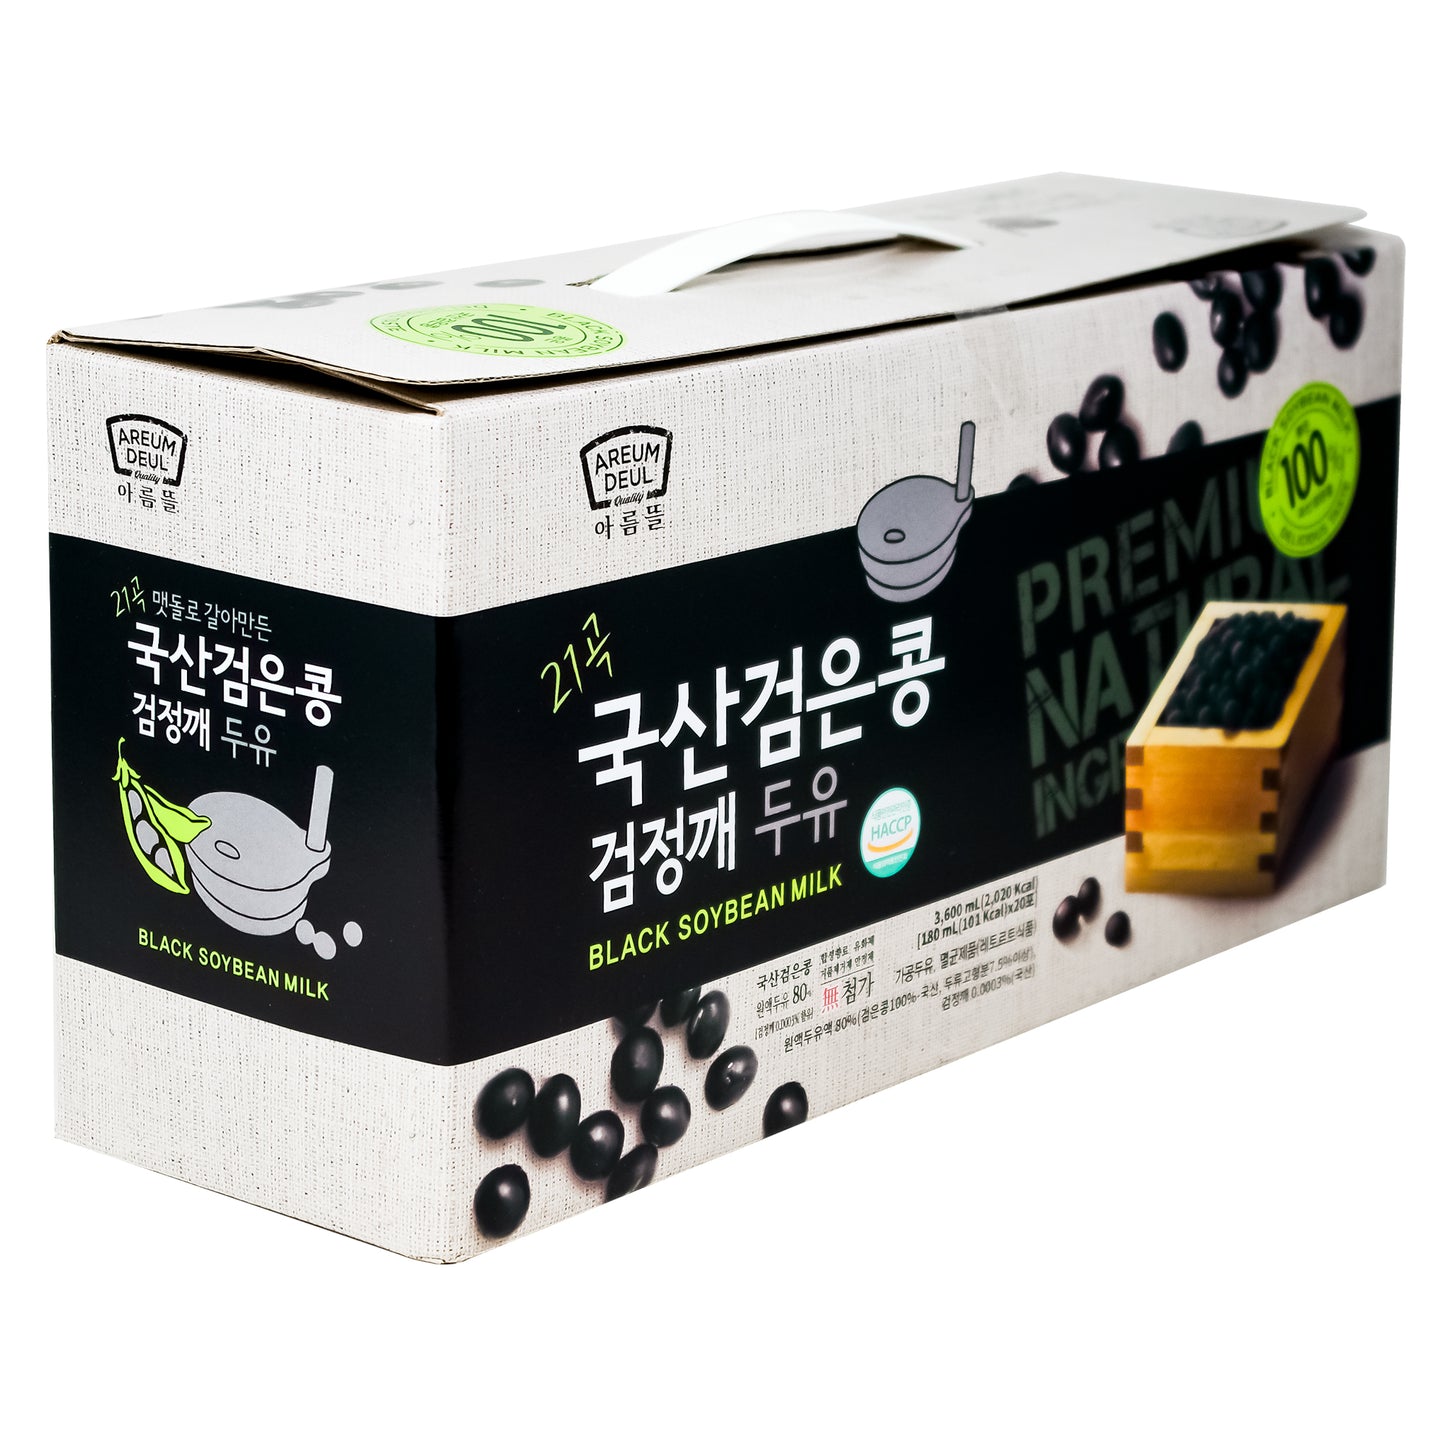 Areumdeul Premium Black Bean and Black sesame Soy Milk, 6.0 Fl. Ounce (Pack of 20) 아름뜰 21곡 검은콩 검정깨 두유 180ml (20포)